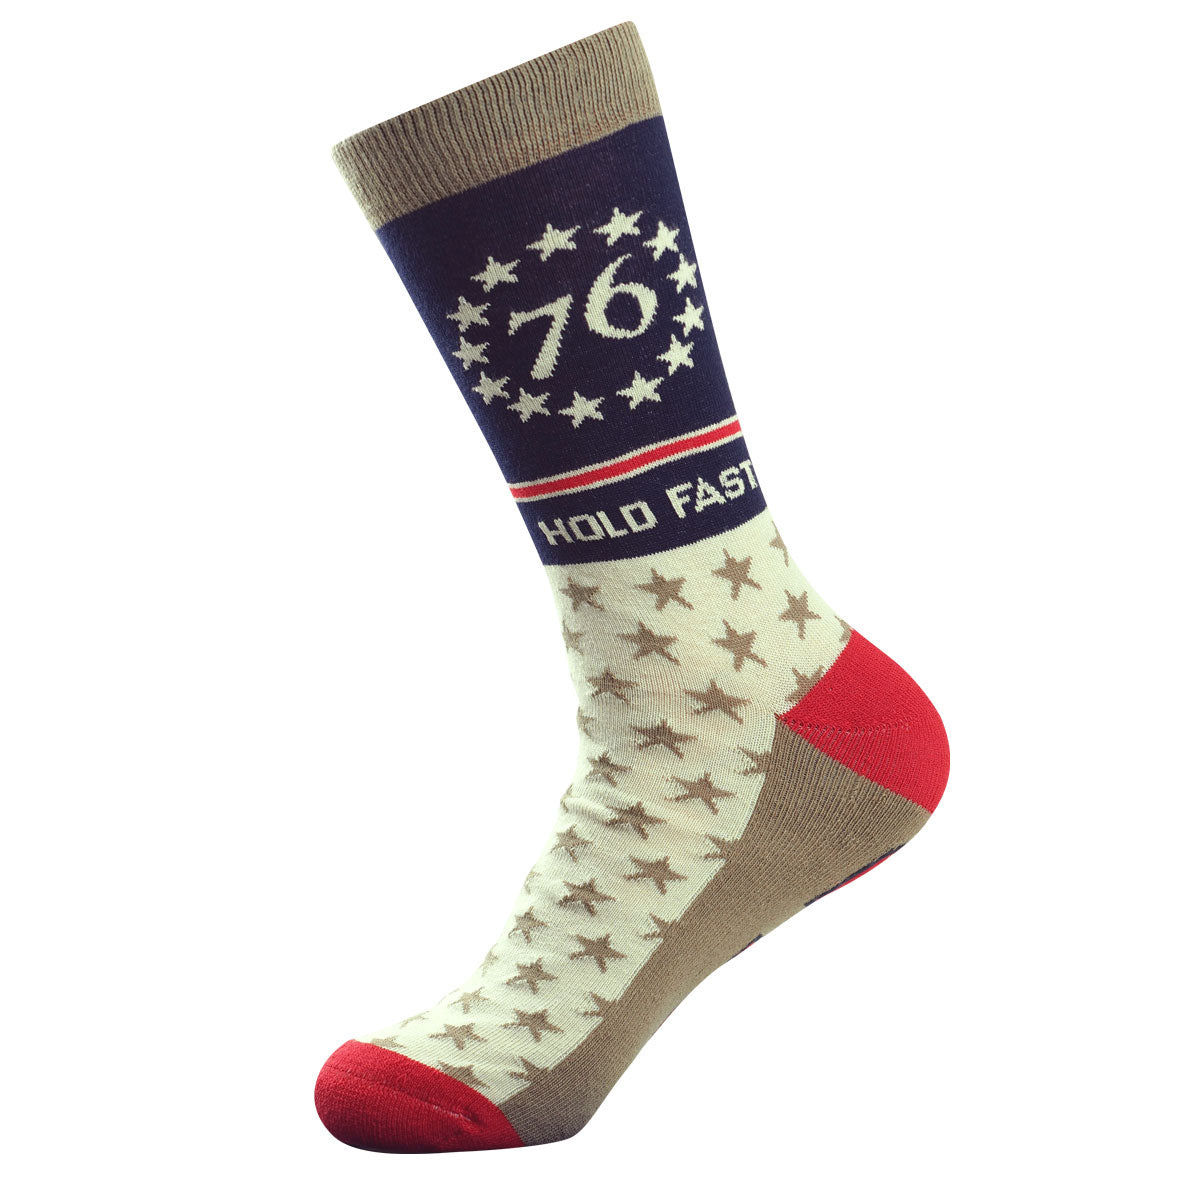 HOLD FAST Socks 1776